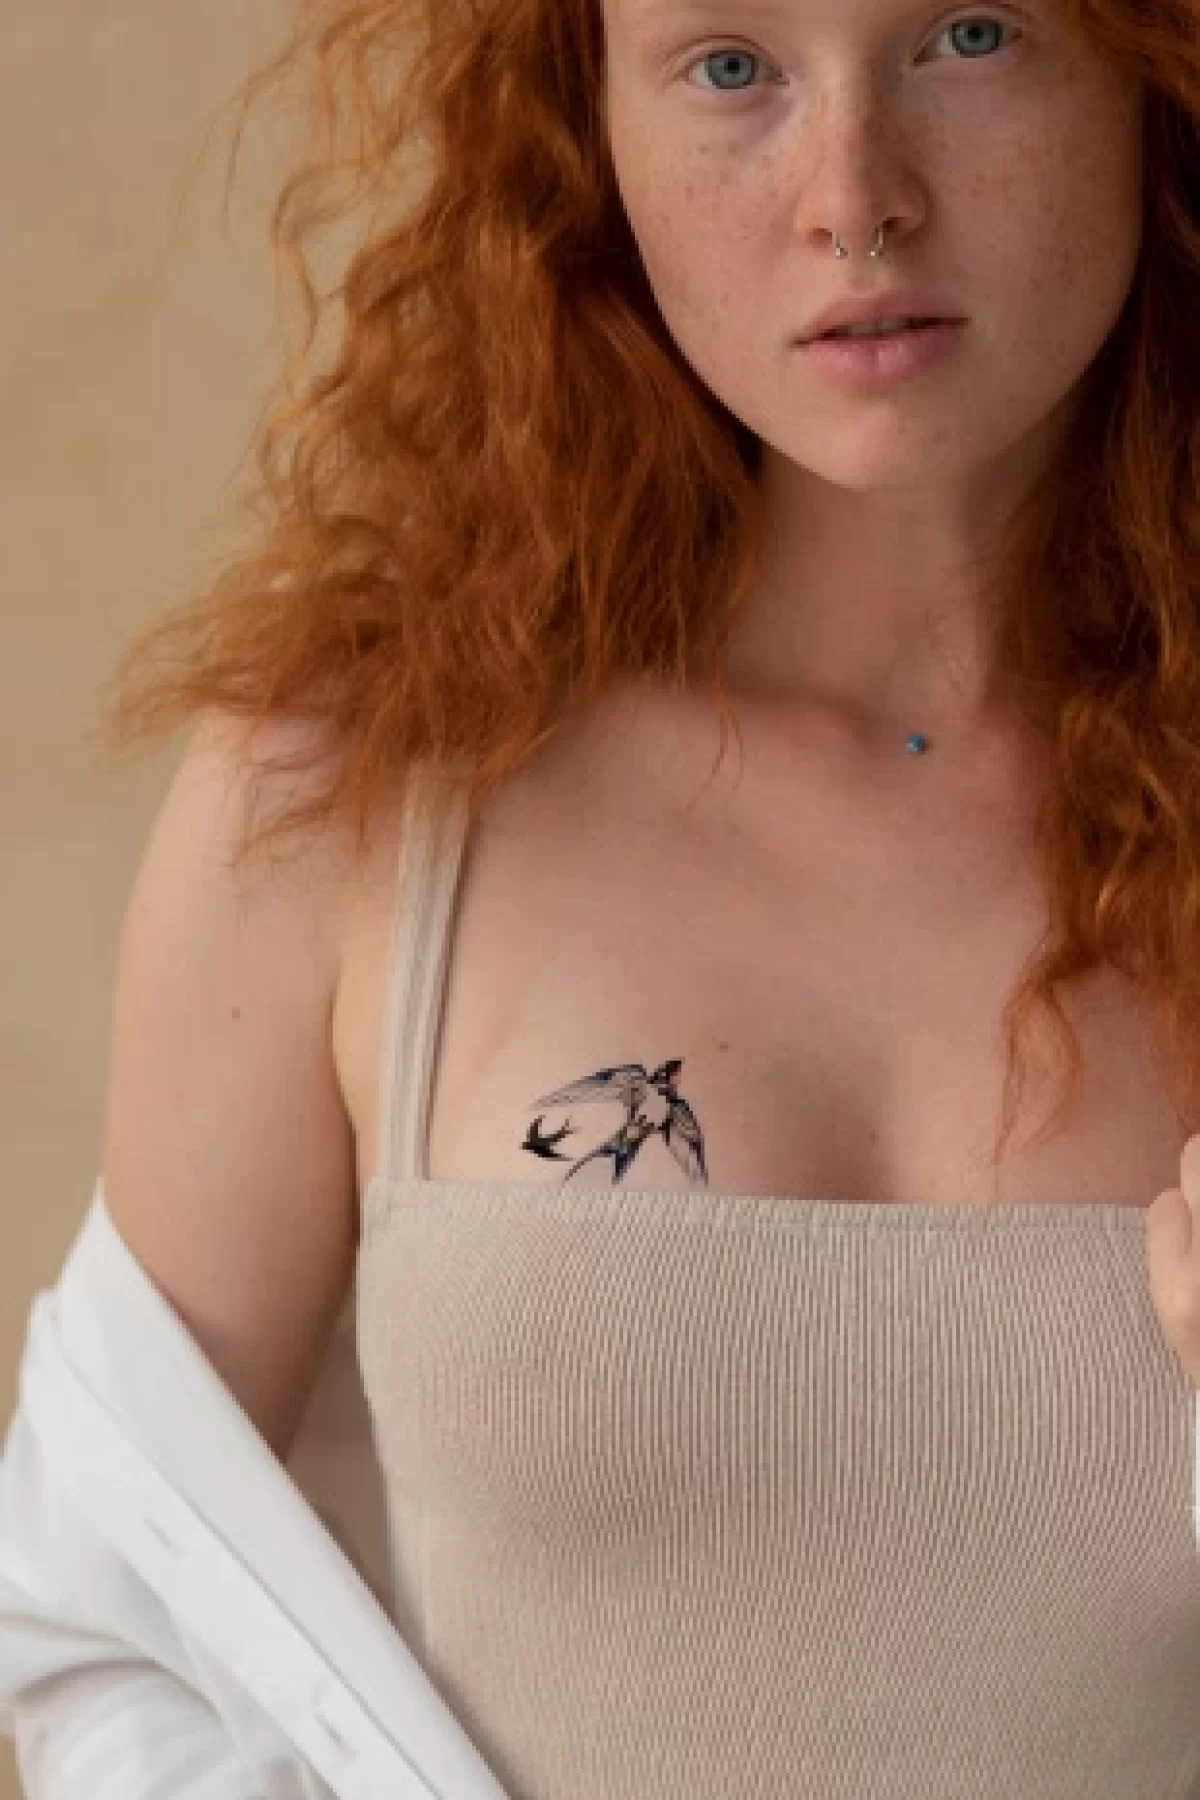 Geçici Kuş Mini Dövme Tattoo